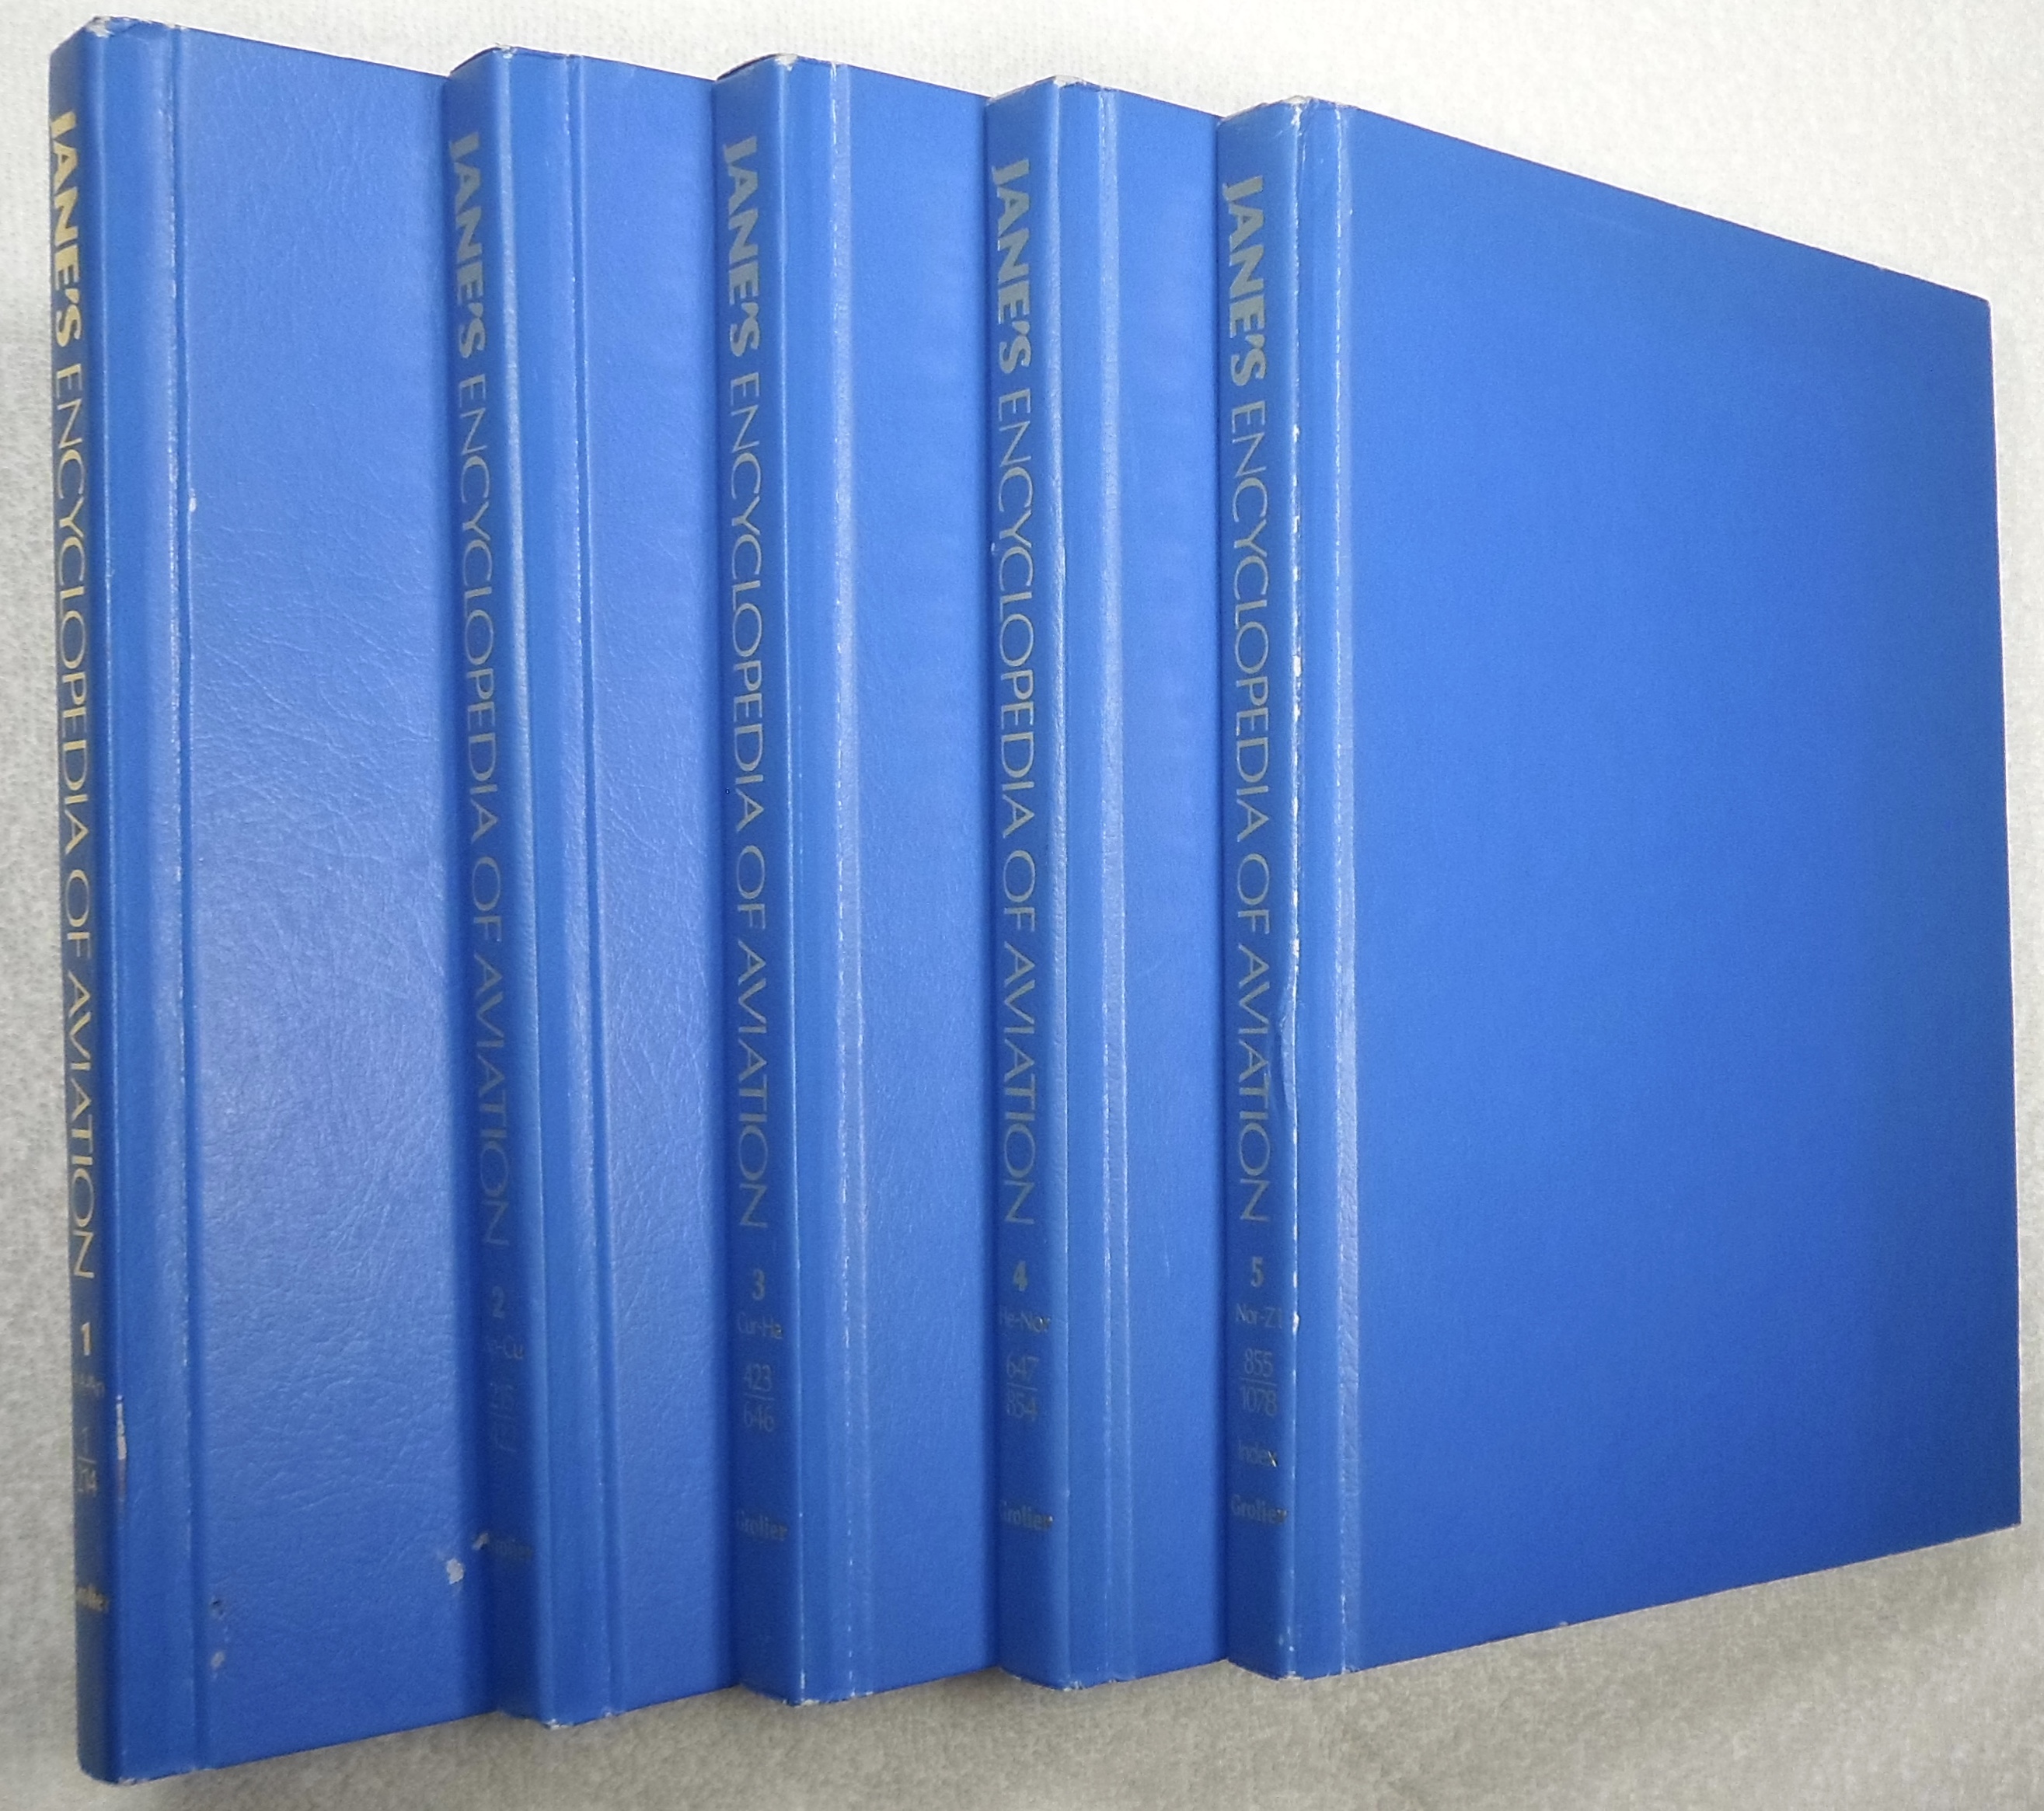 Jane's Encyclopedia Of Aviation, 5 volume set - Michael J.H. Taylor, Compiler and Editor